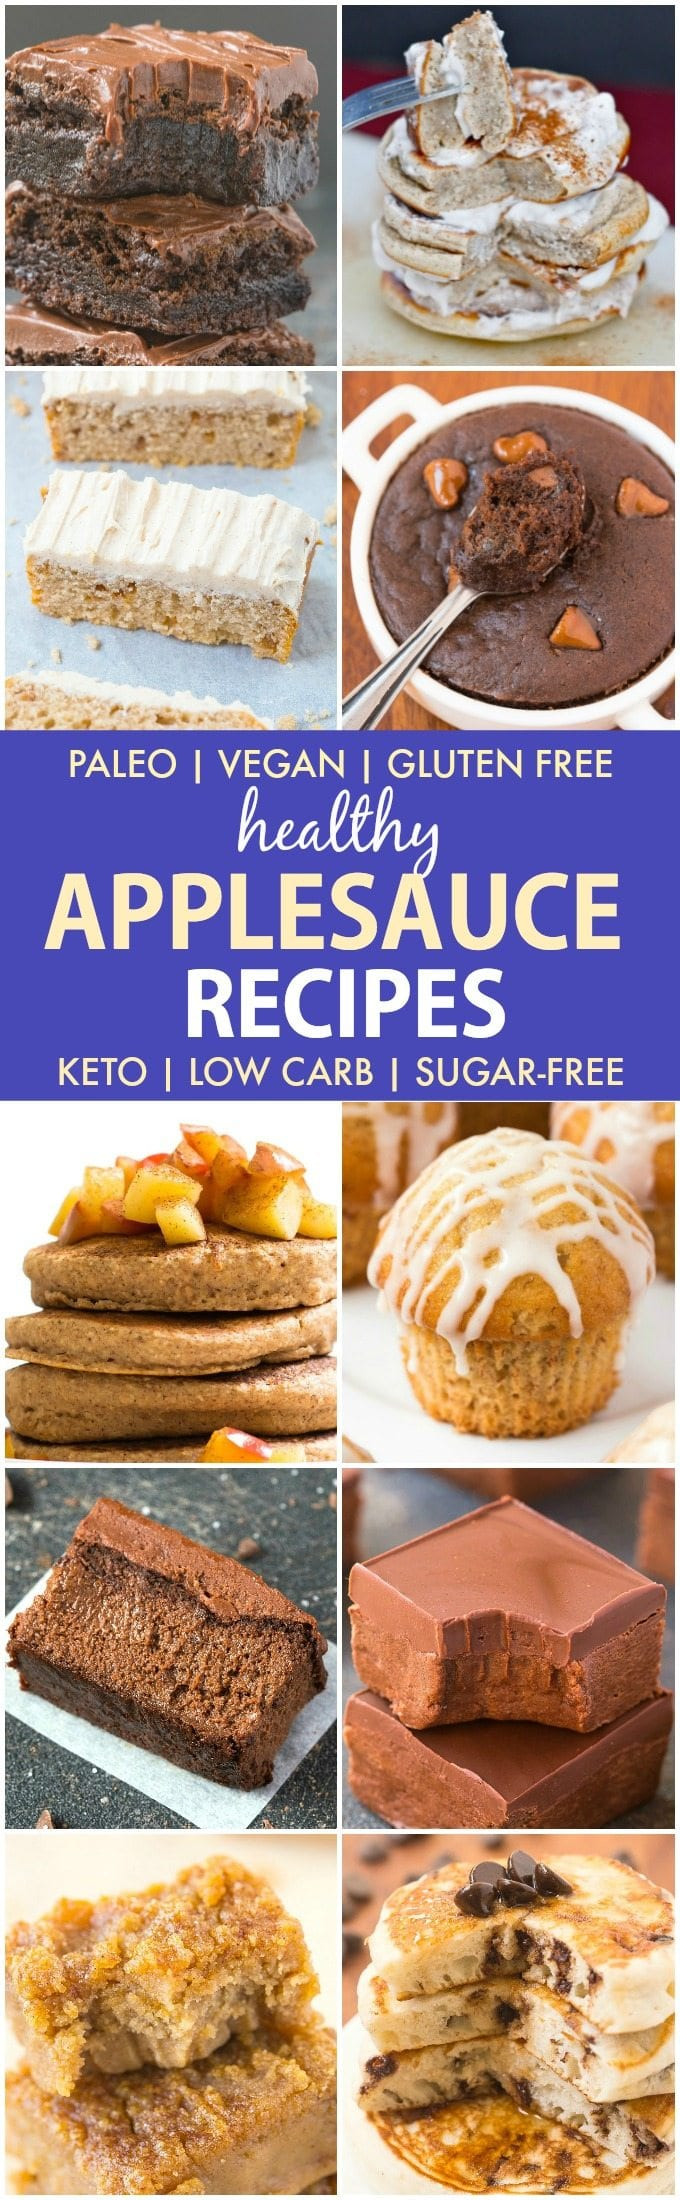 Applesauce Muffins Paleo
 20 Healthy Recipes Using Applesauce Paleo Vegan Gluten